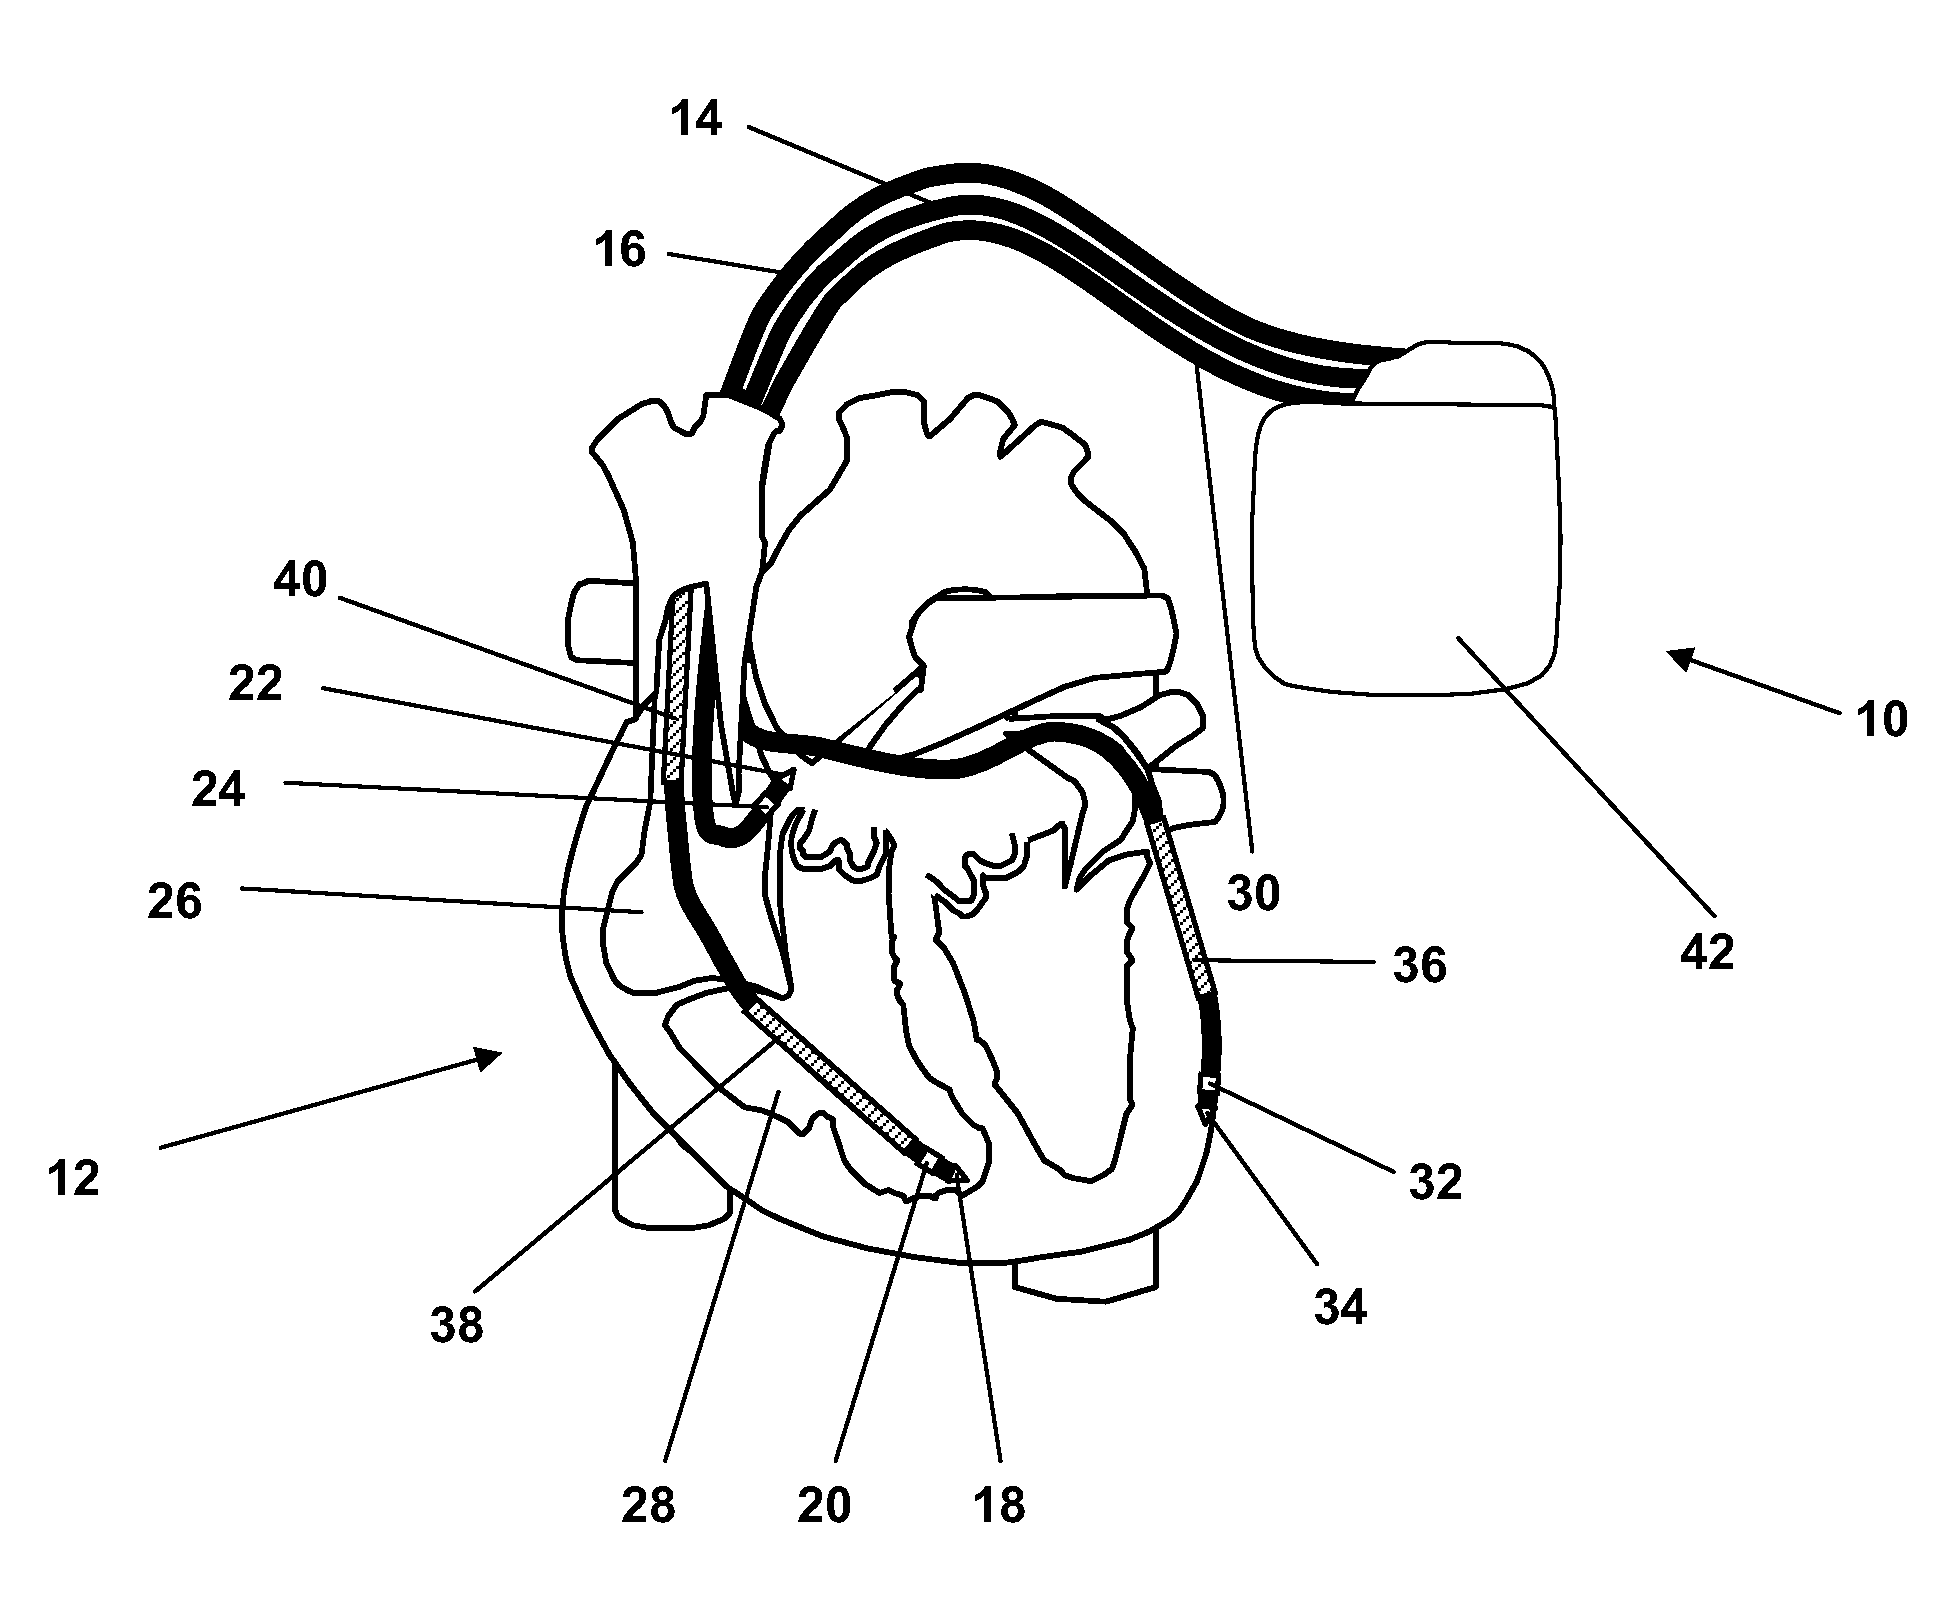 Antitachycardiac stimulator